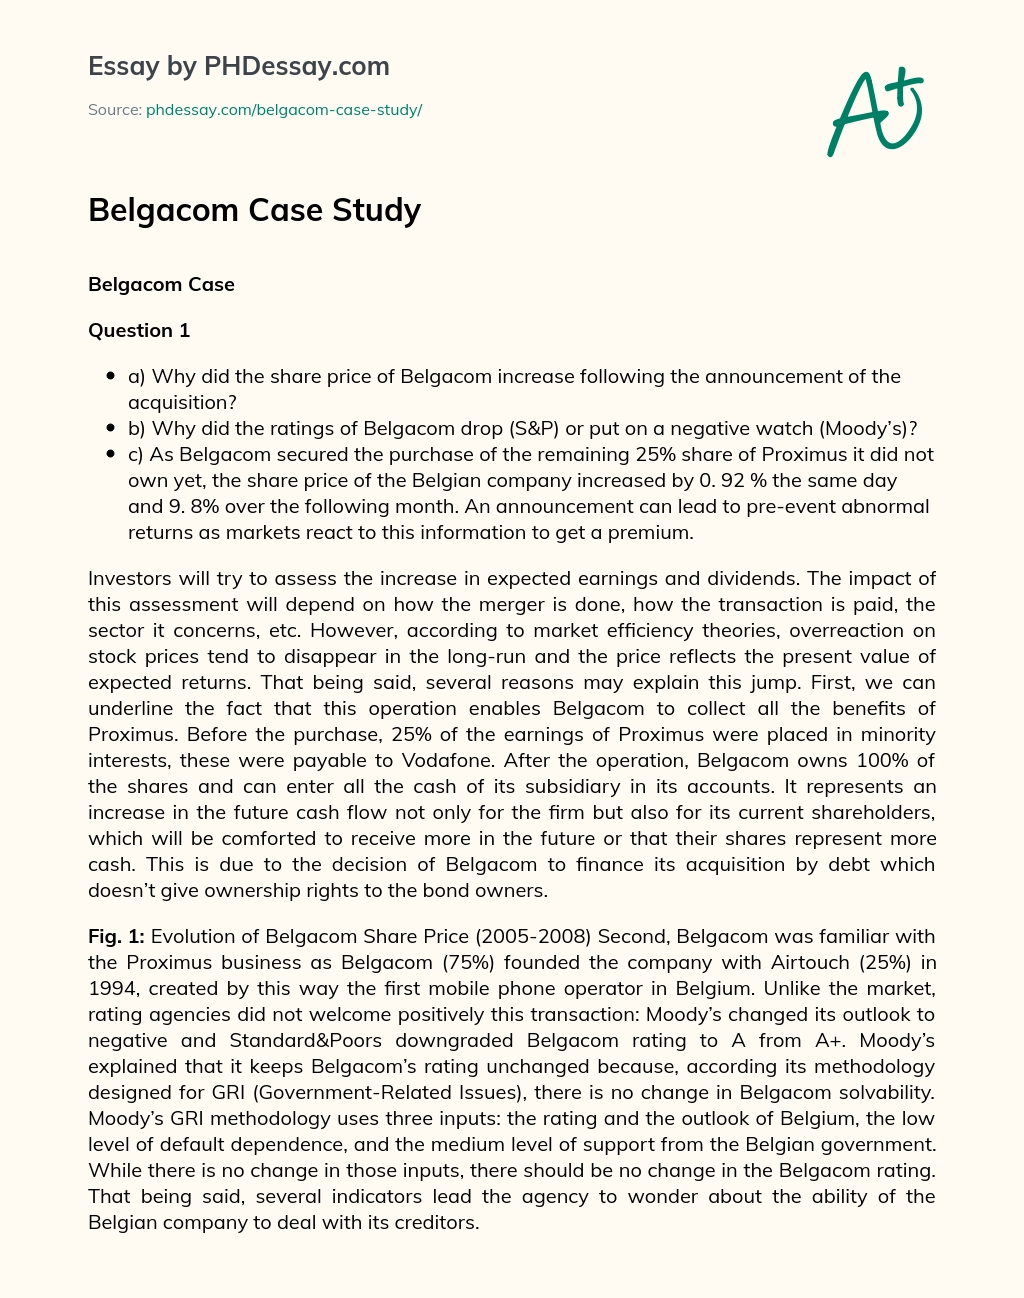 Belgacom Case Study essay